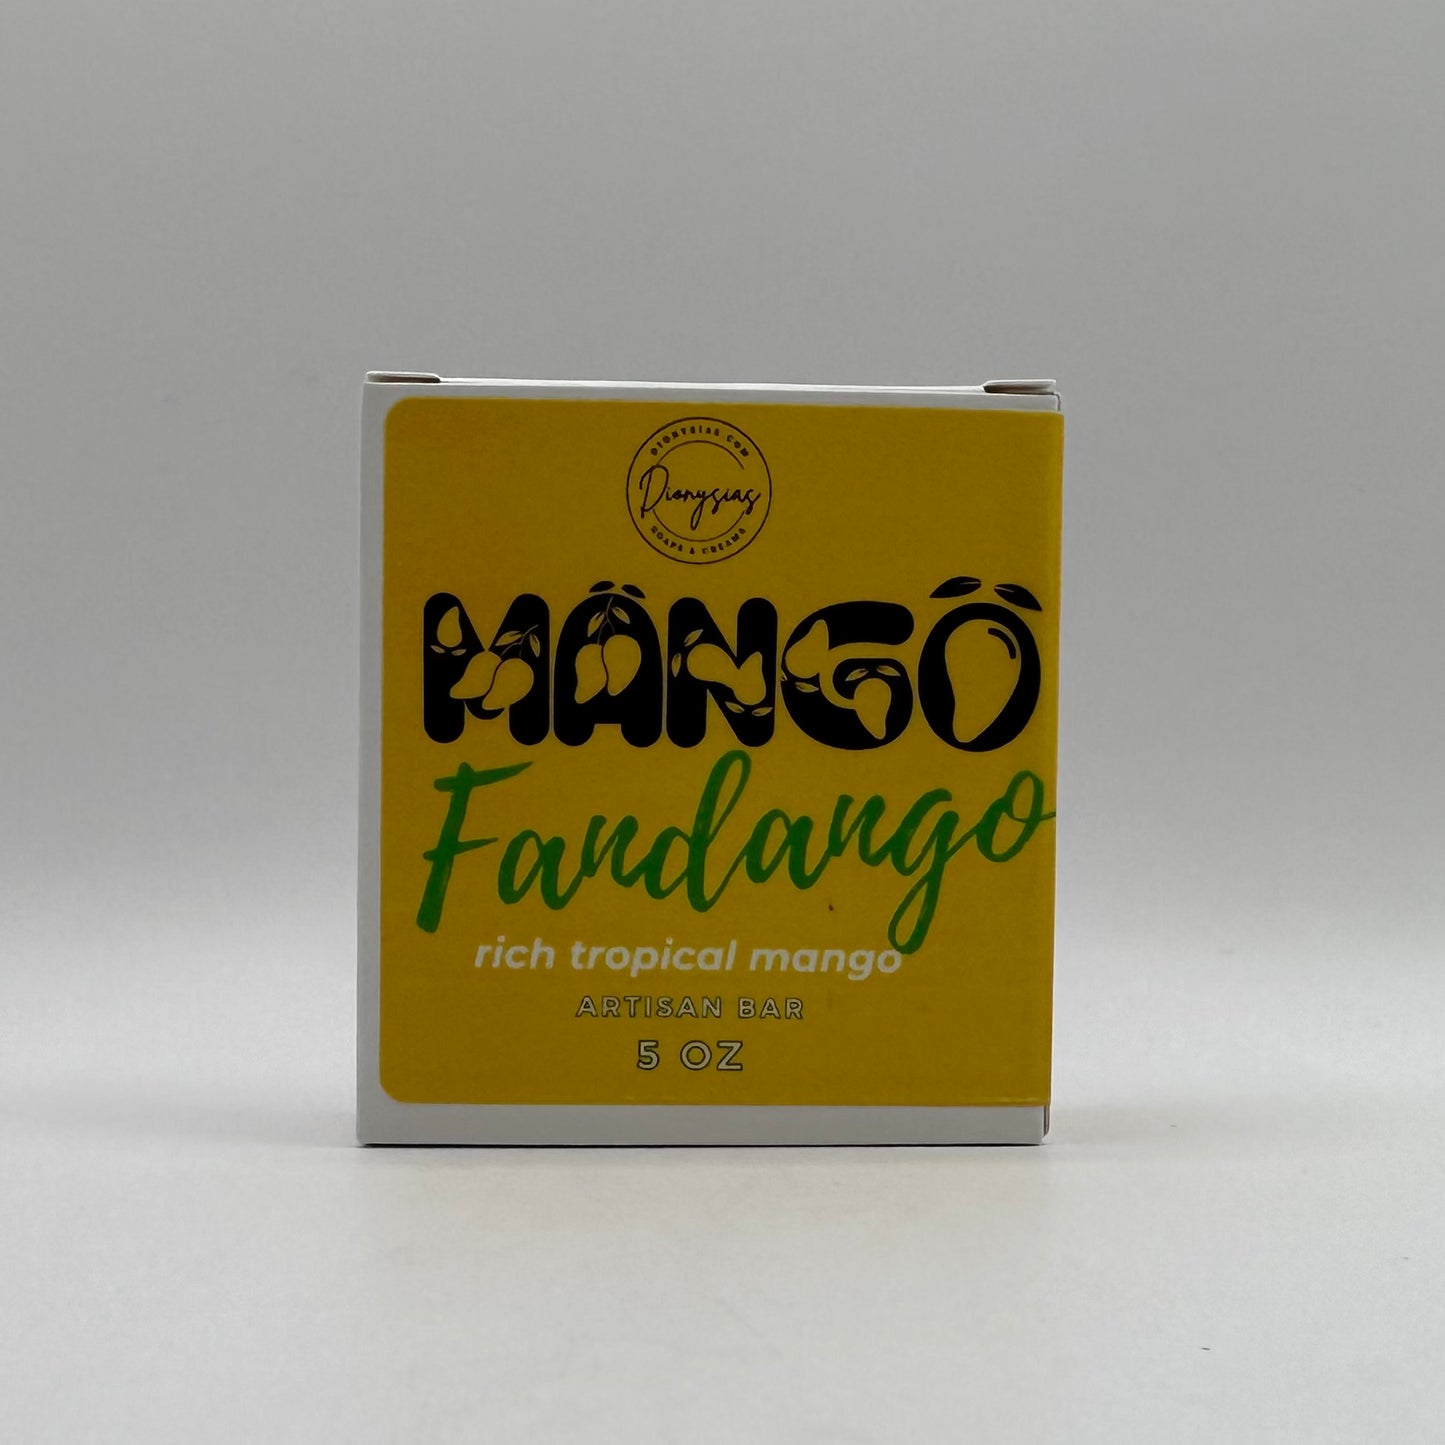 Mango Fandango (artisan bar)